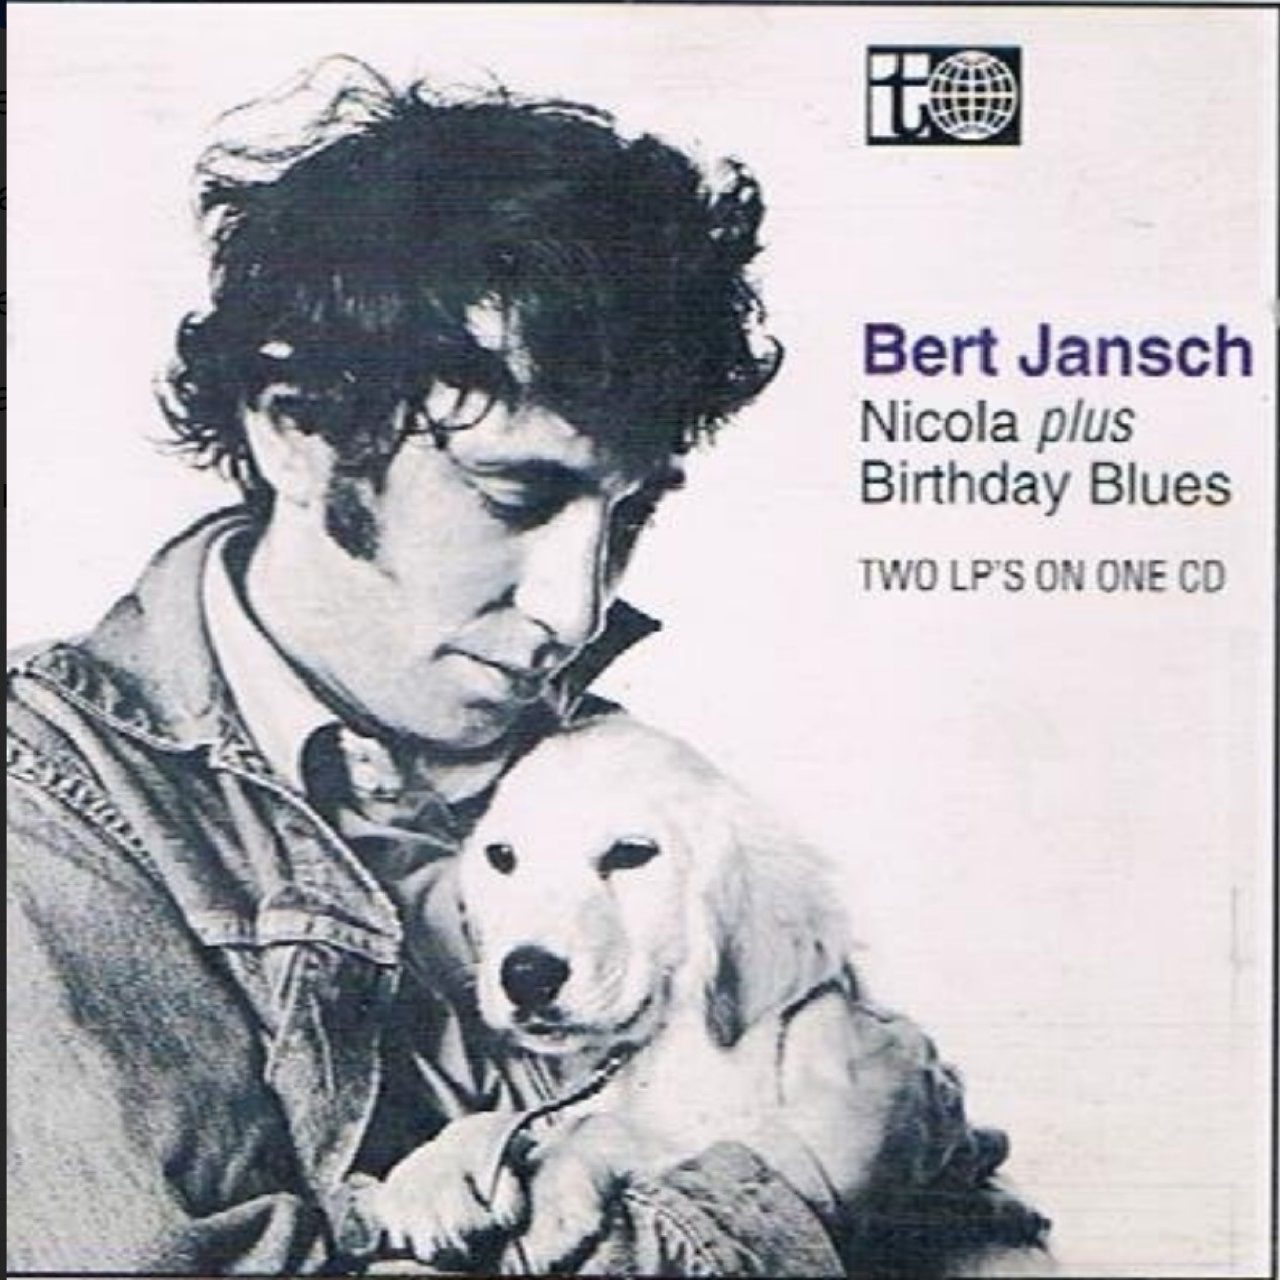 Bert Jansch – Nicola plus Birthday Blues cover album